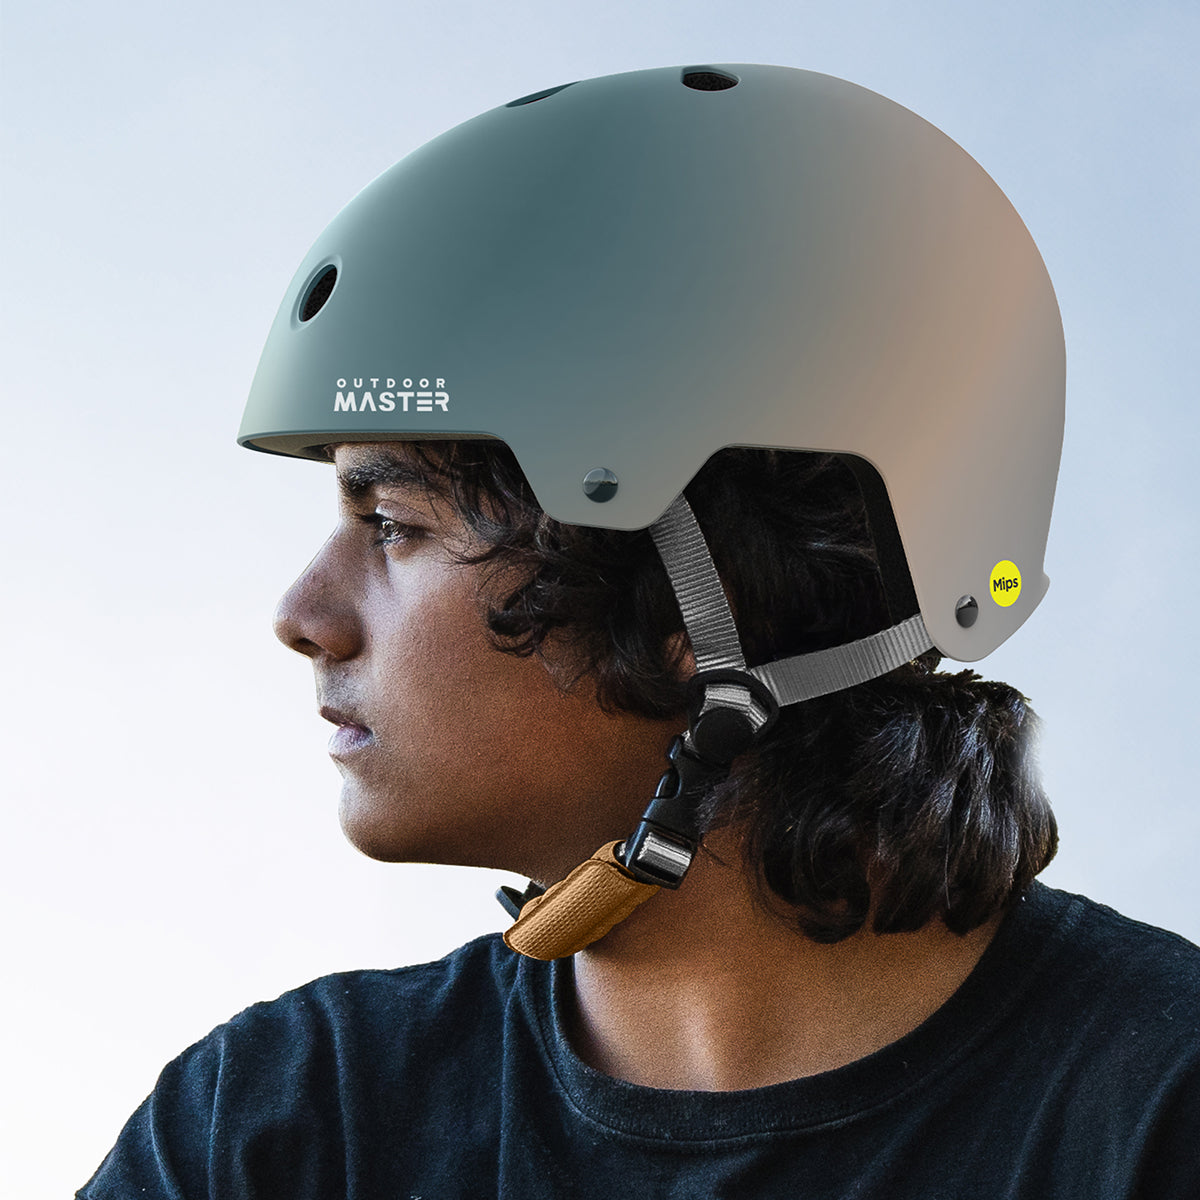 Oryx MIPS Skateboard Helmet